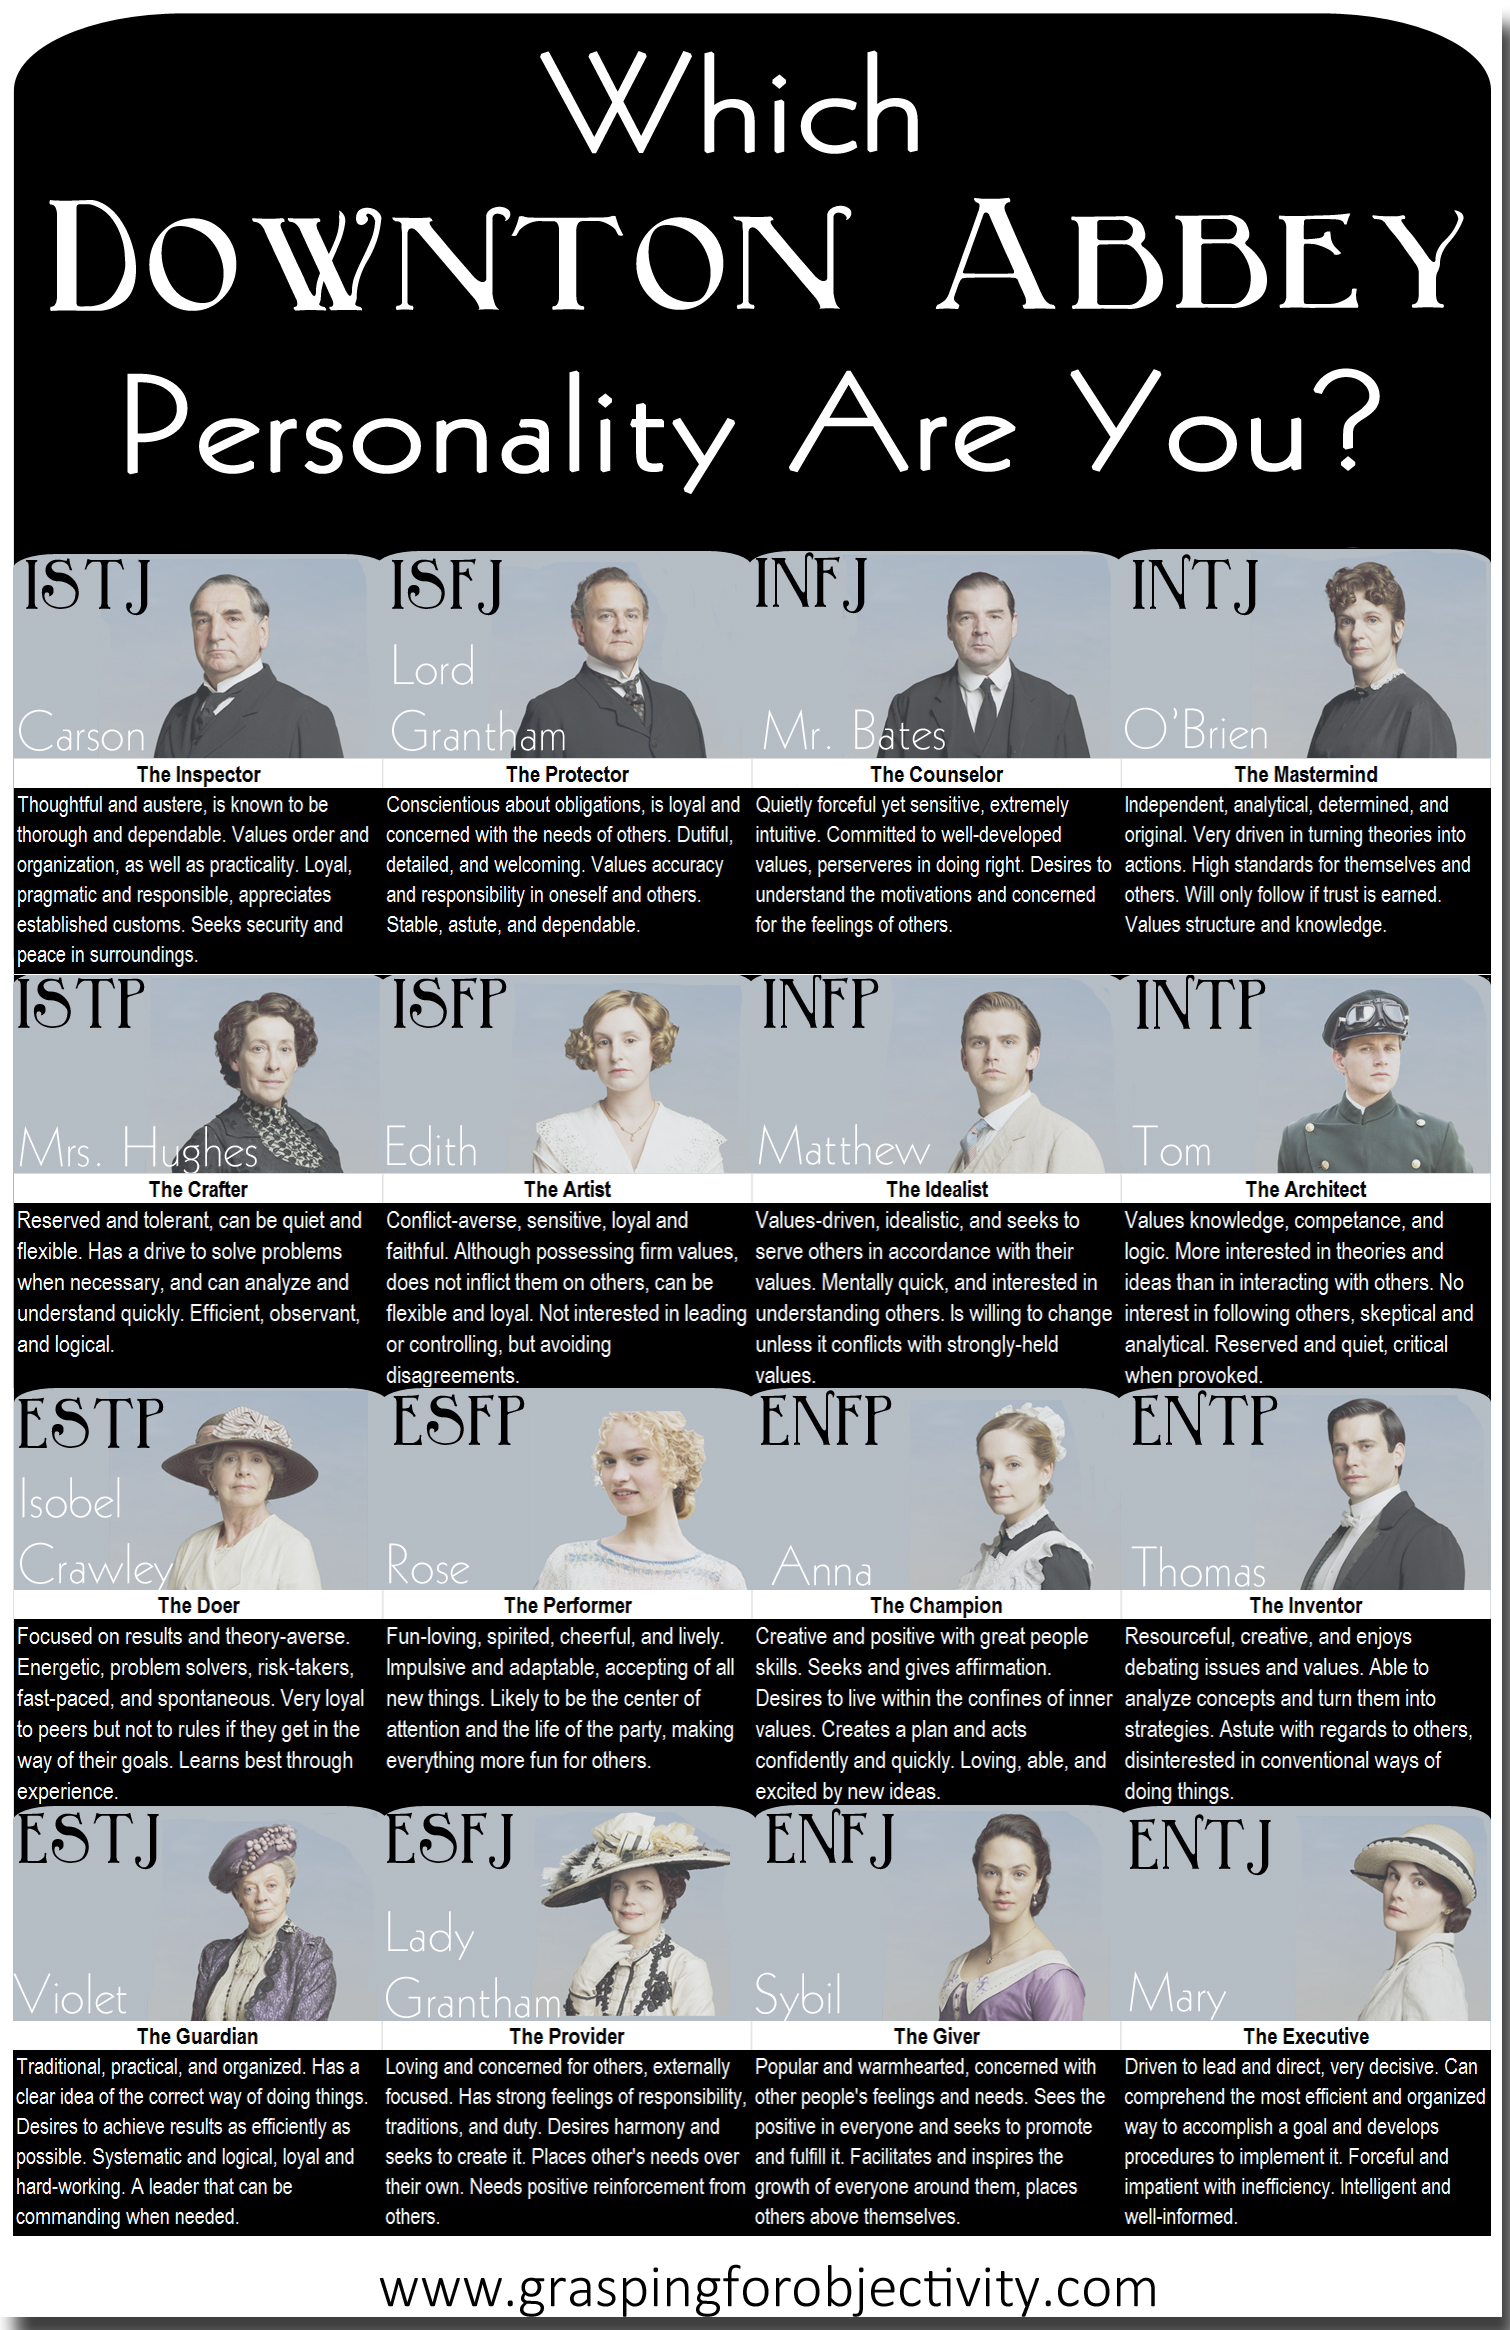 Amu MBTI Personality Type: ESTJ or ESTP?